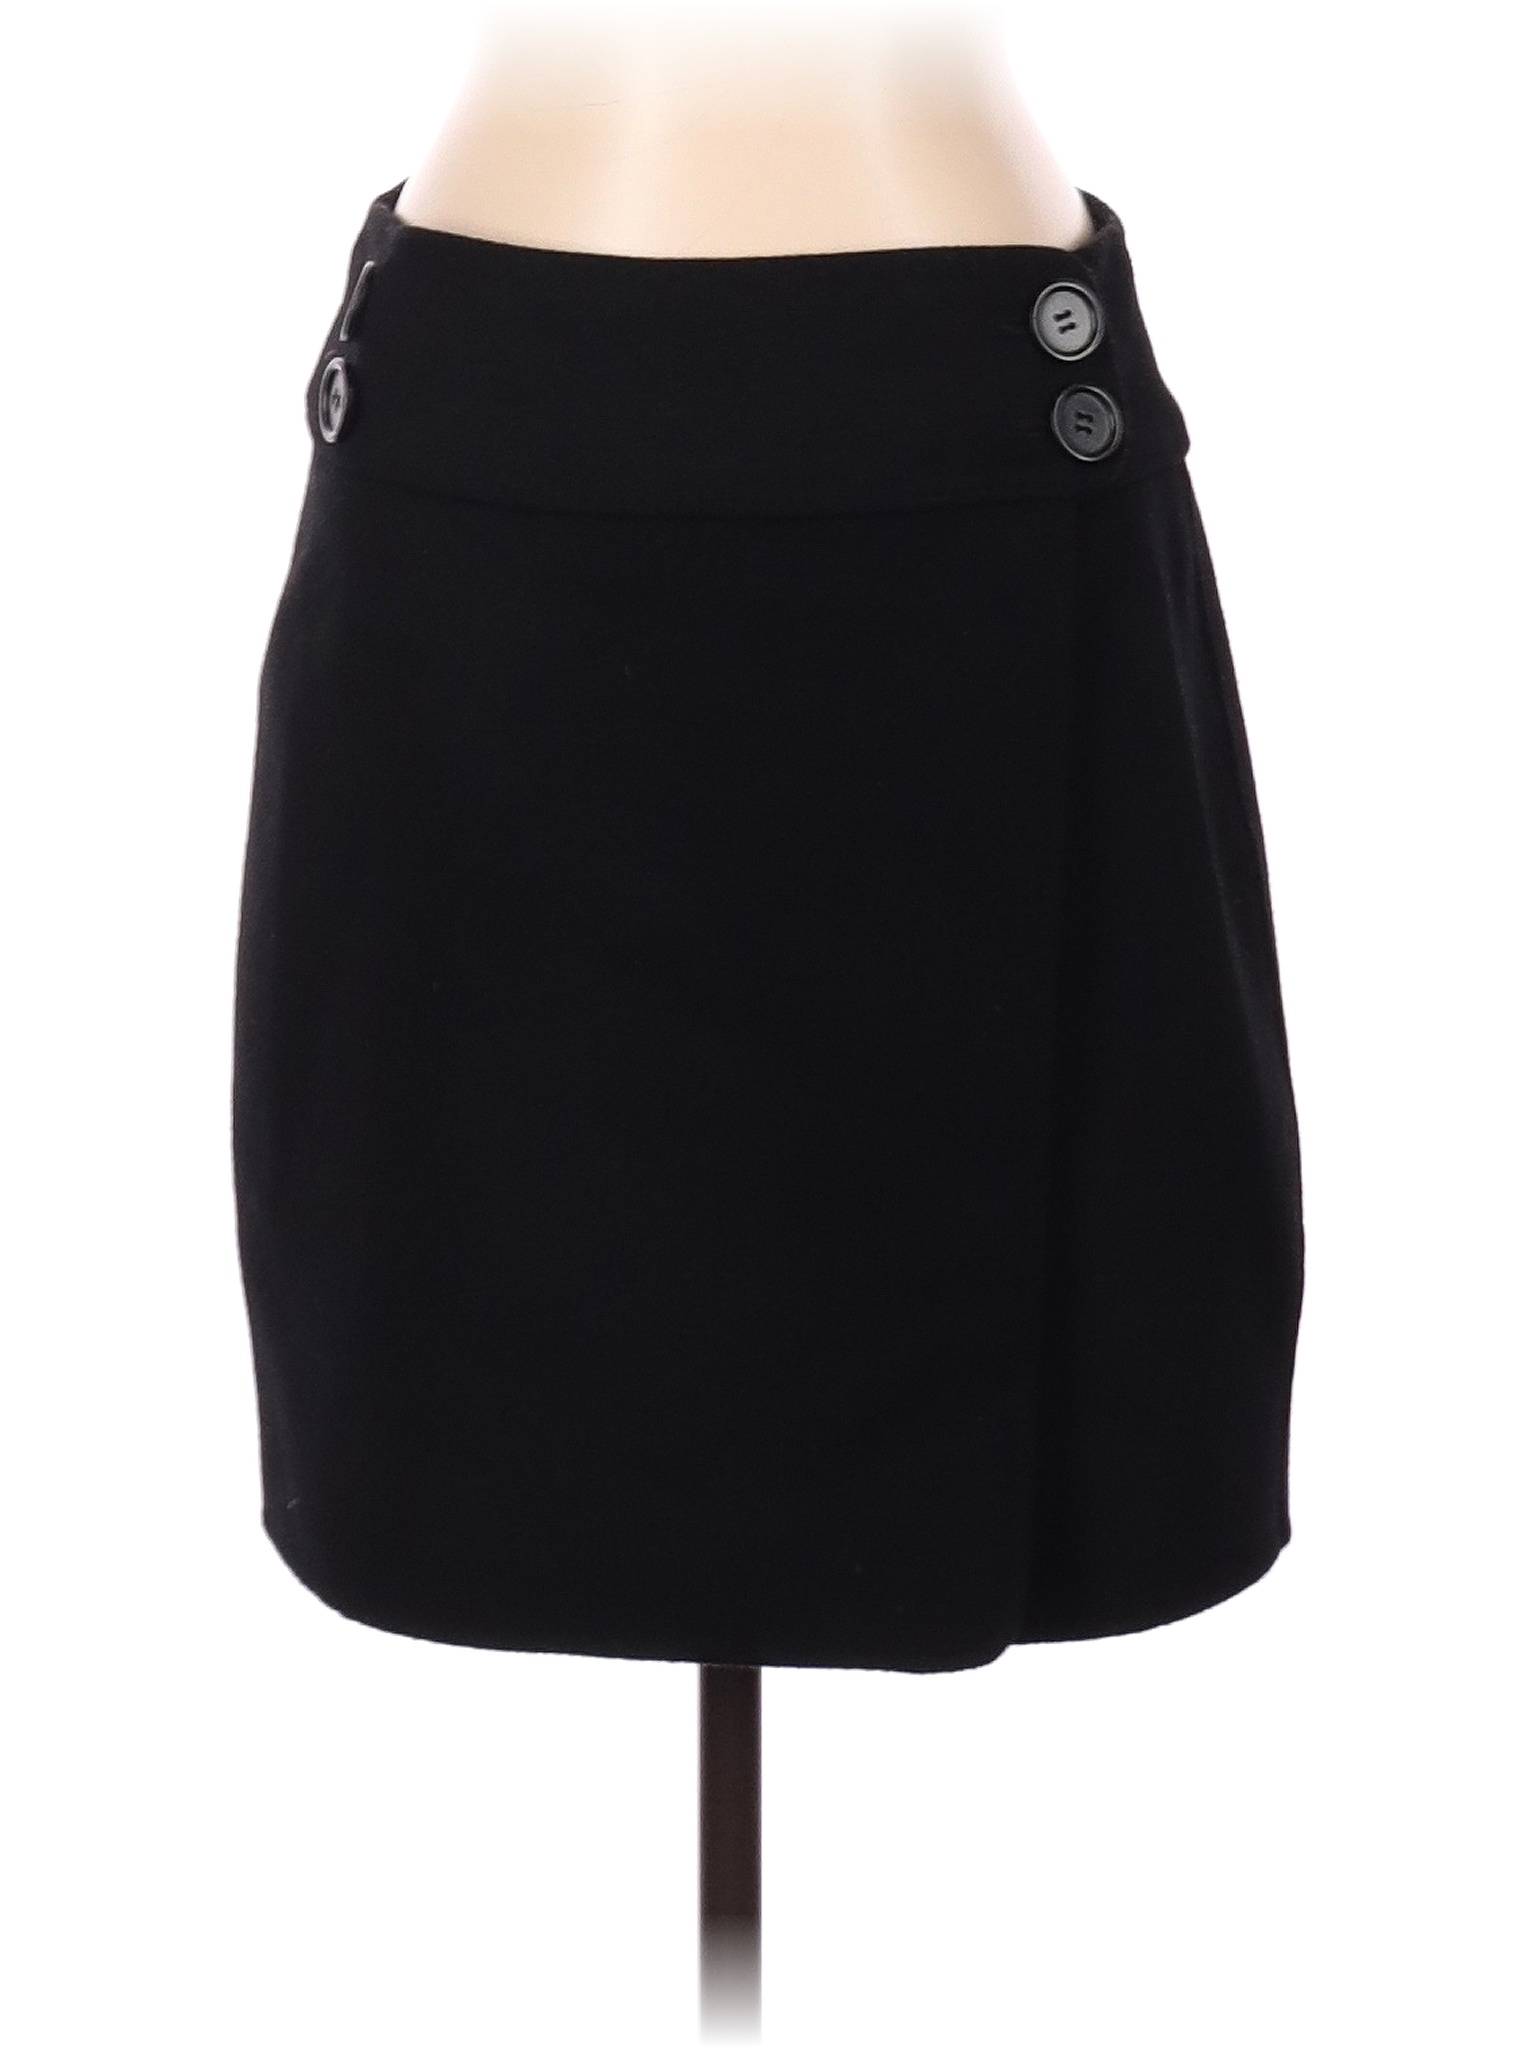 Leon Max Solid Black Wool Skirt Size 0 - 90% off | thredUP